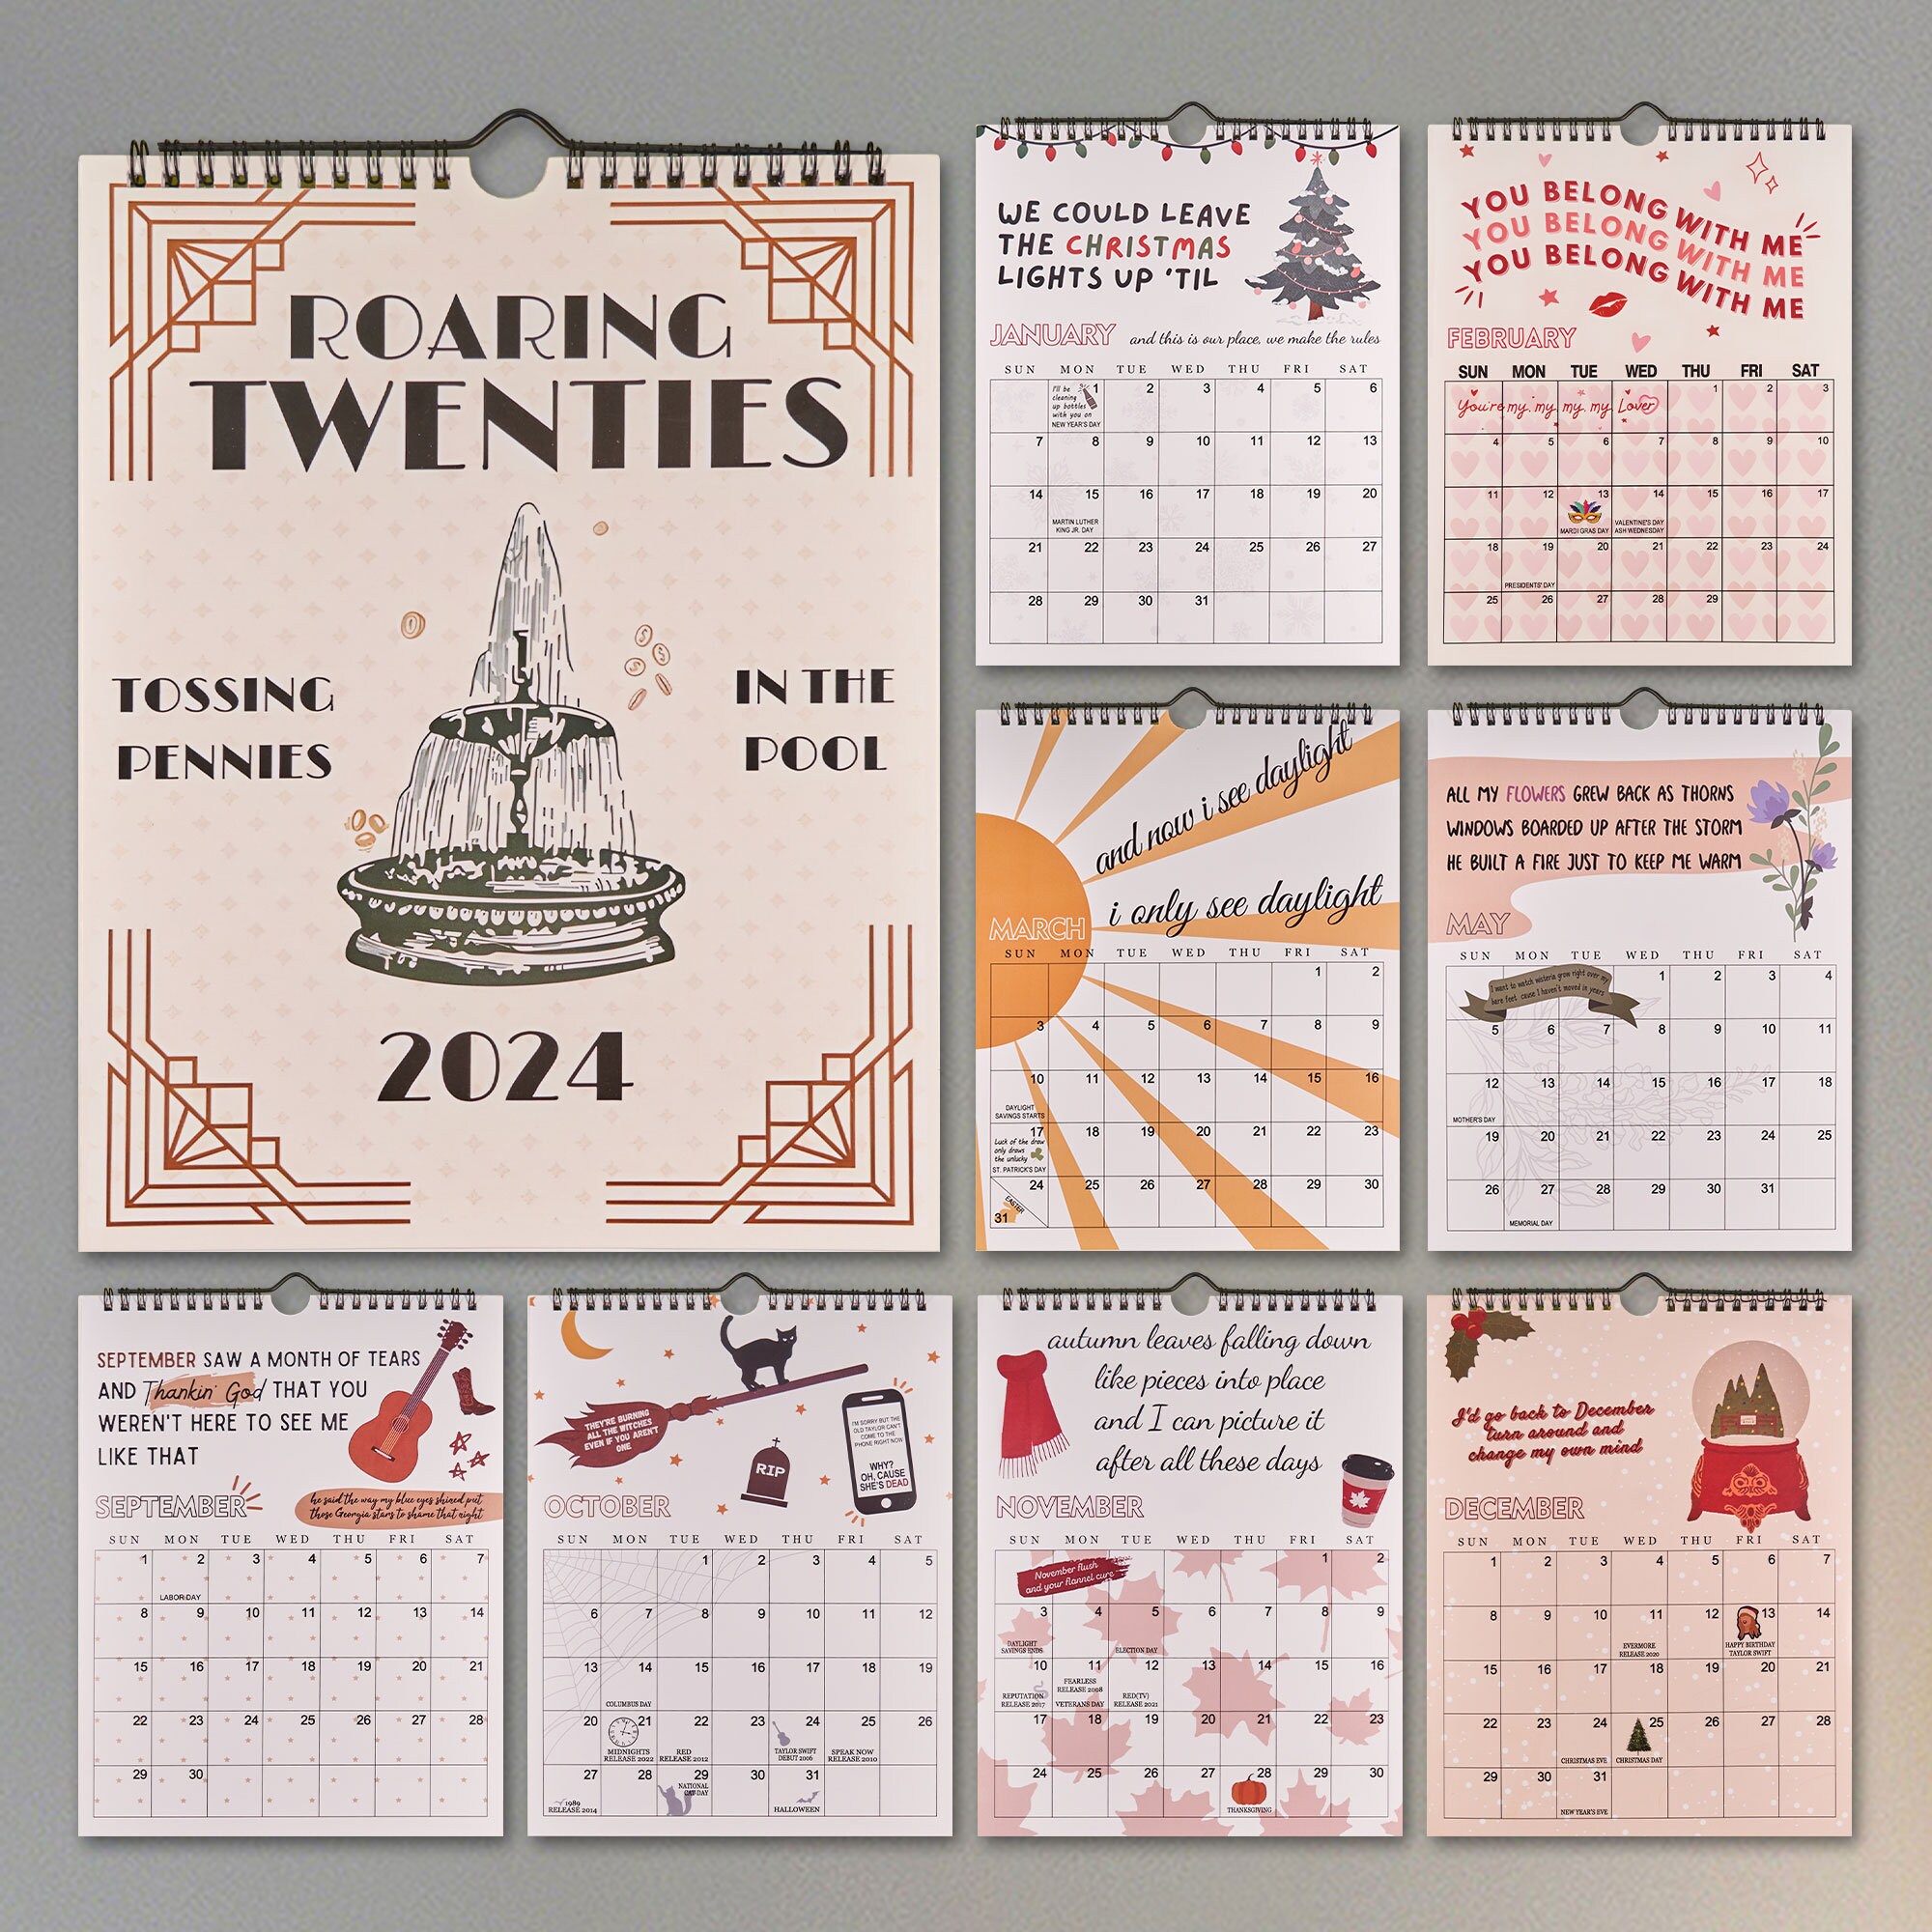 2024-taylor-swift-roaring-twenties-calendar-a-must-have-for-swifties